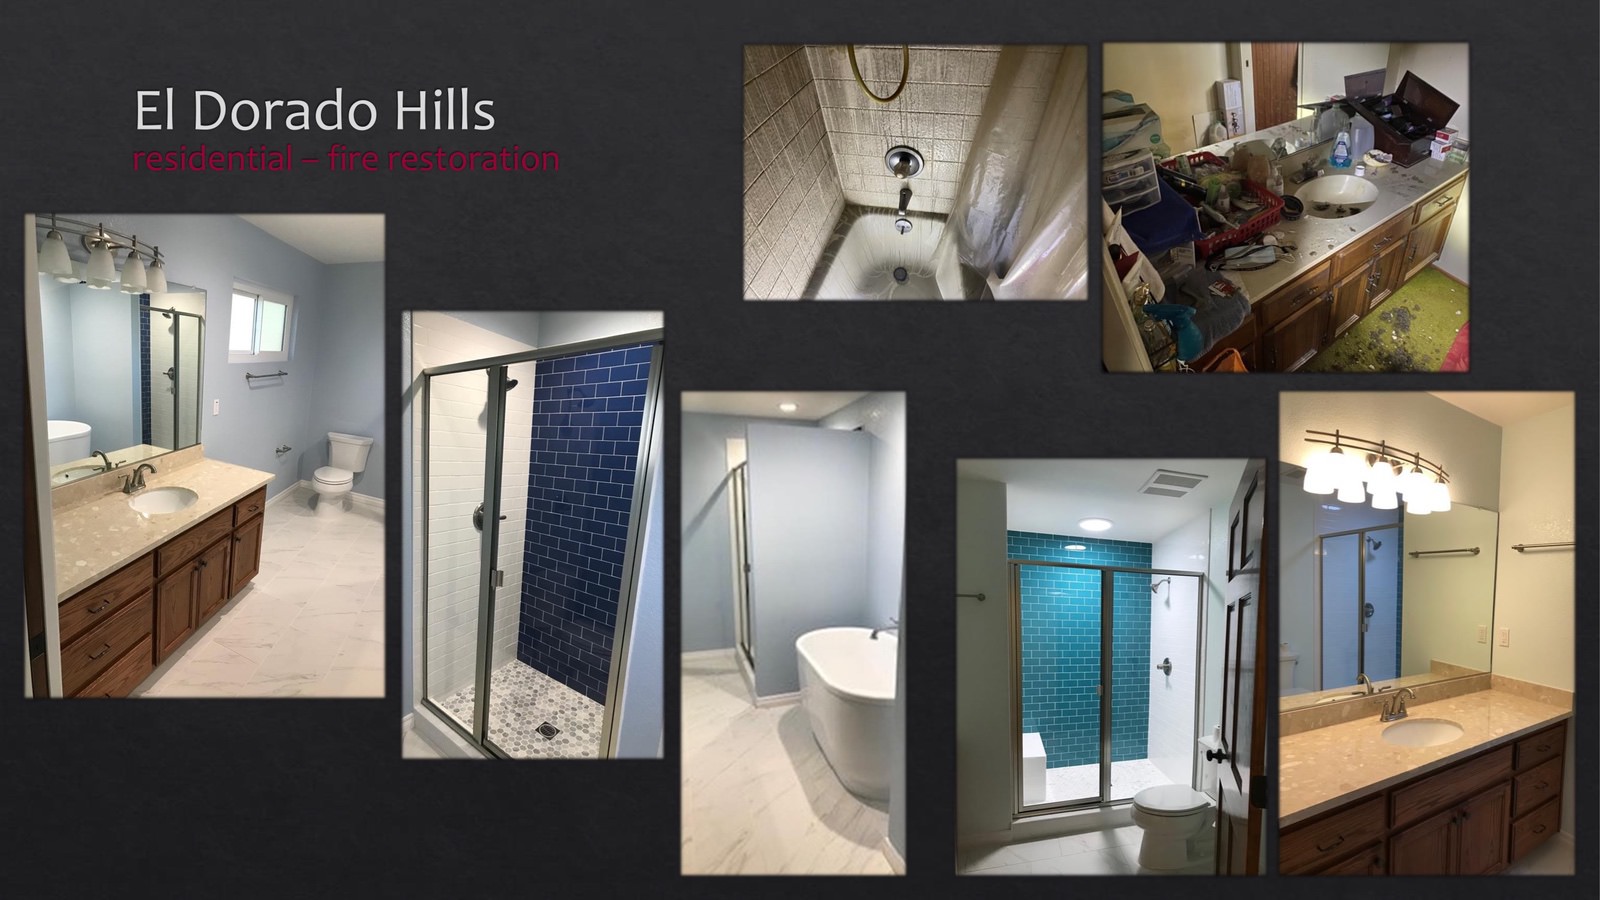 El Dorado Hills Residential fire restoration - bathroom